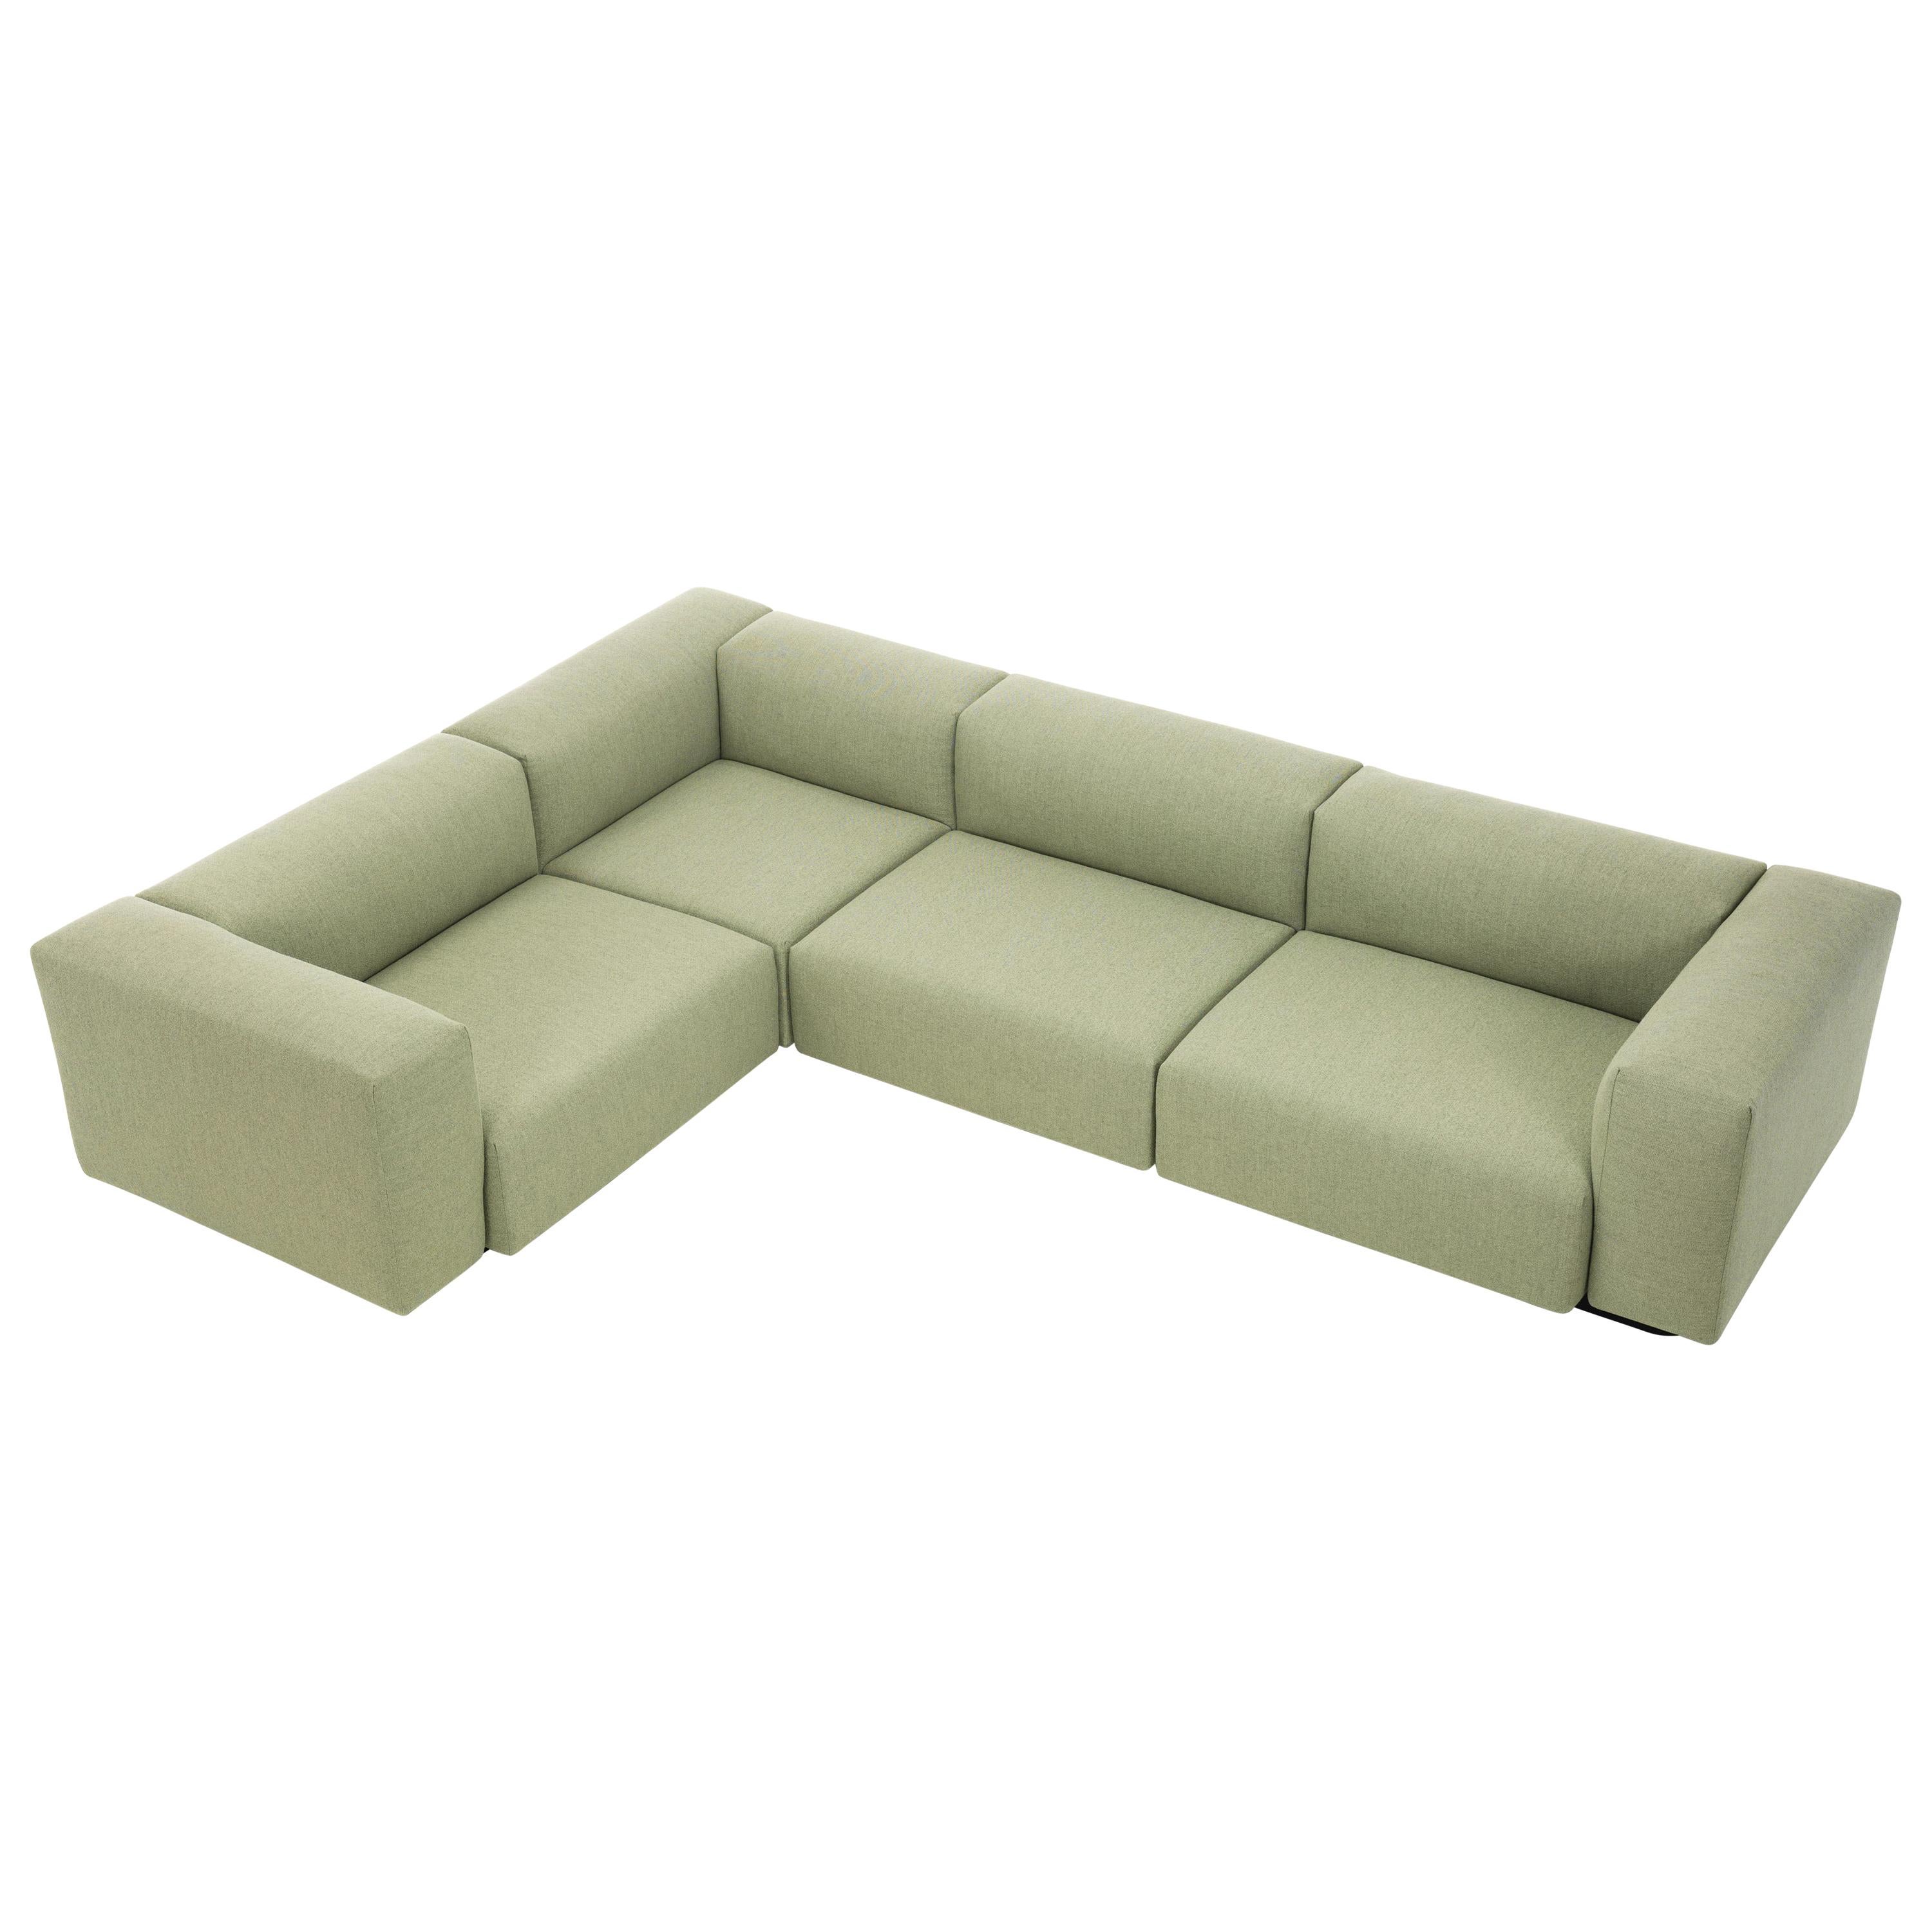 Vitra Soft Modular Sofa with Corner in Sage & Pebble Dumet by Jasper Morrison For Sale